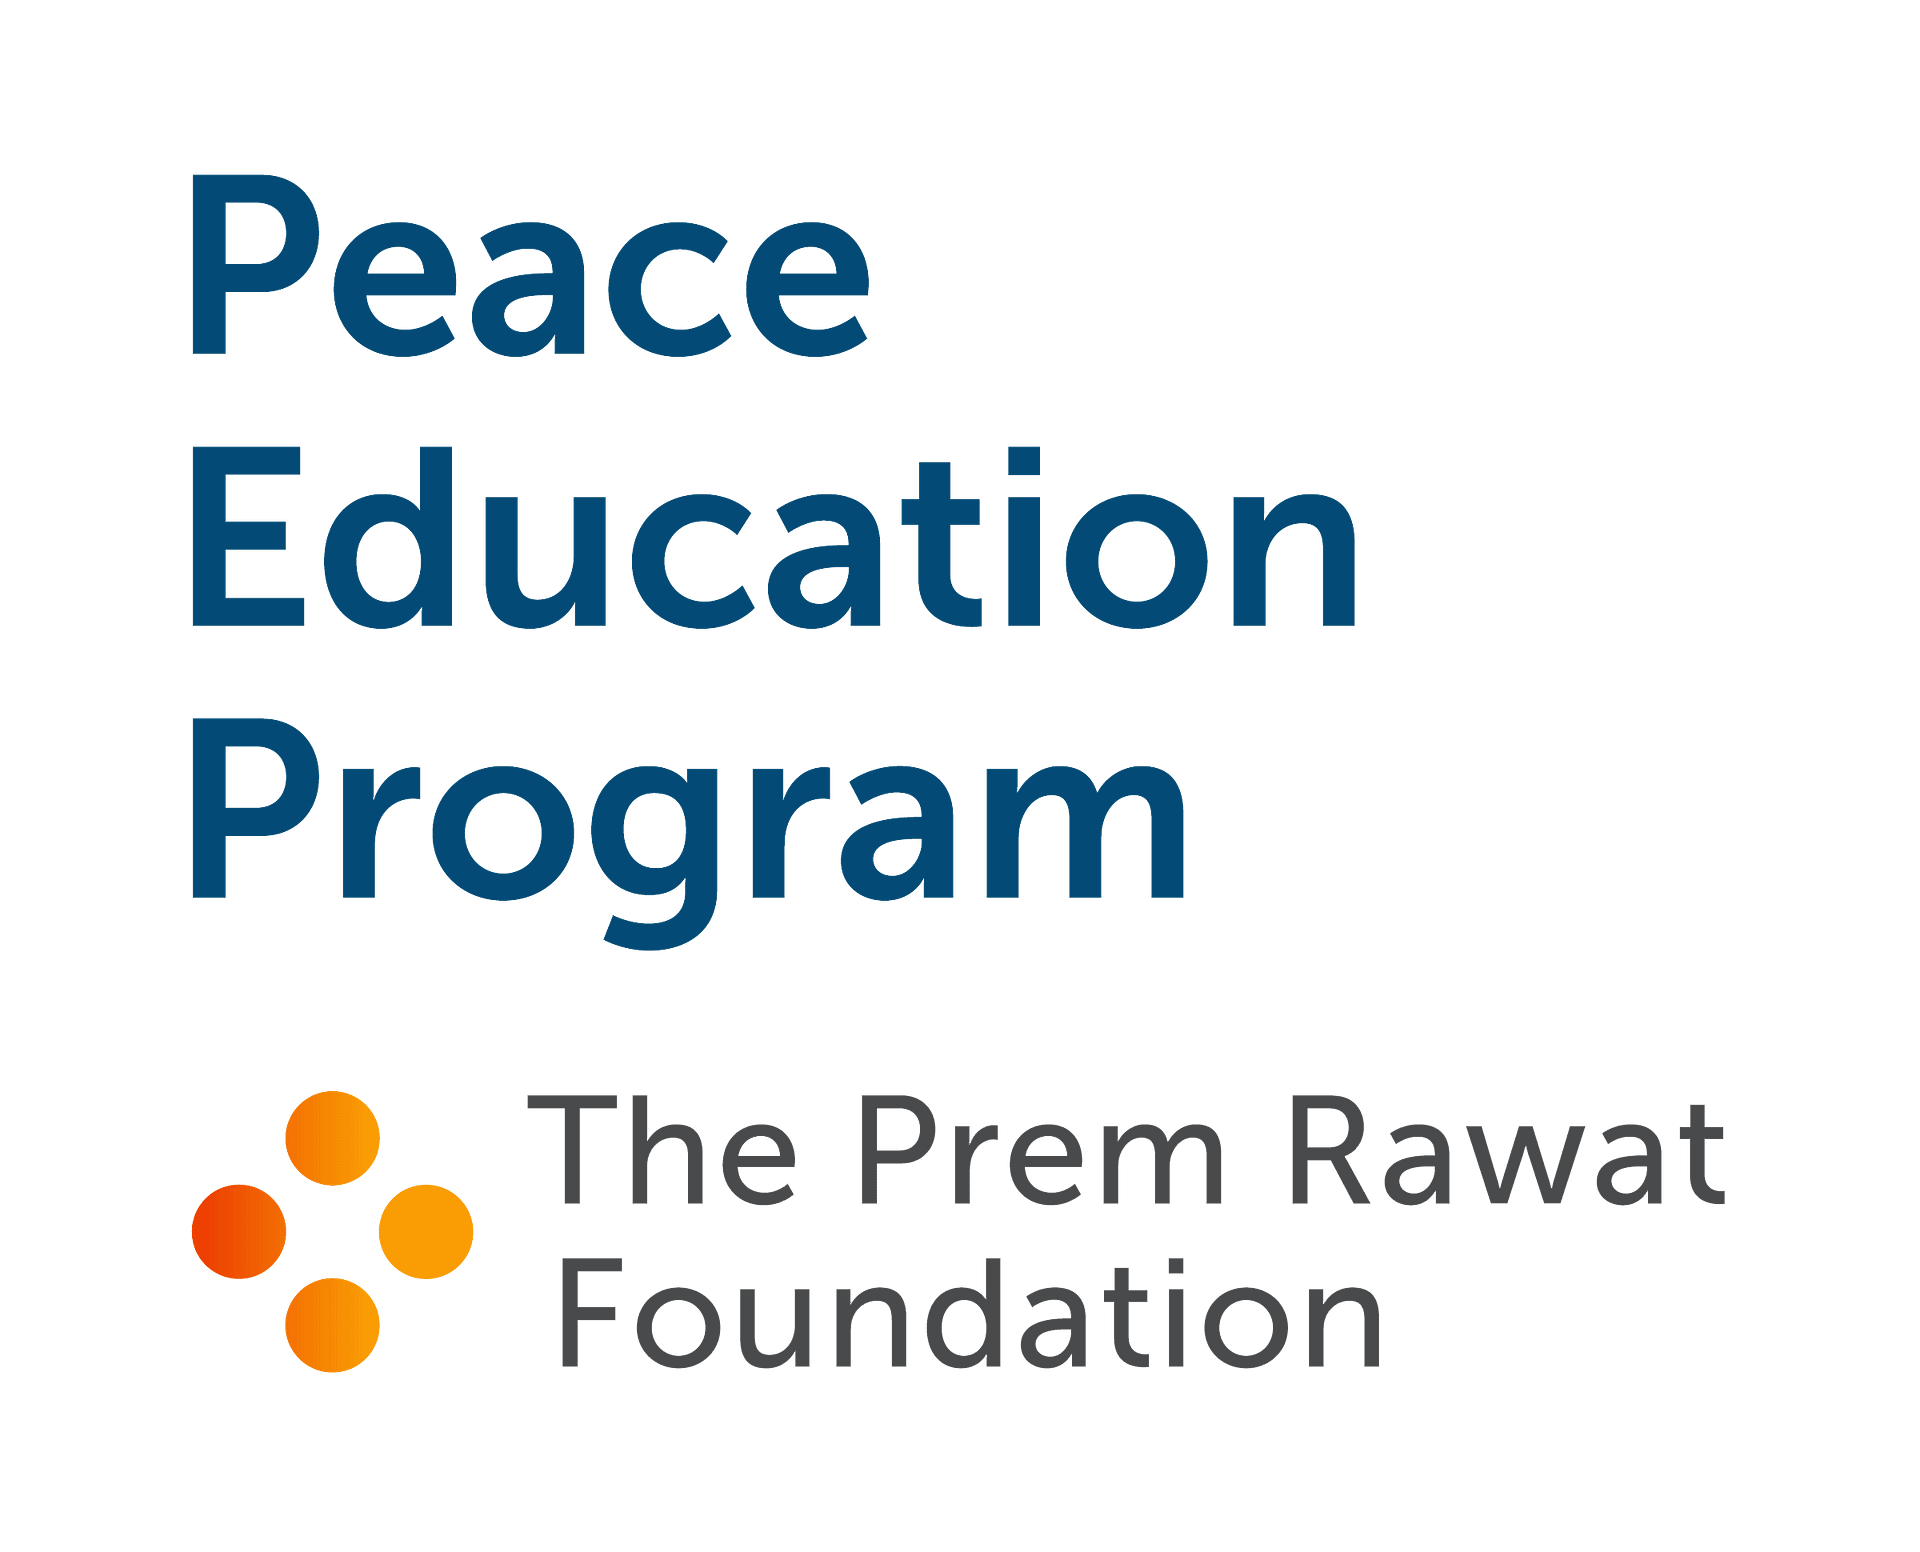 TPRF Peace Education Program